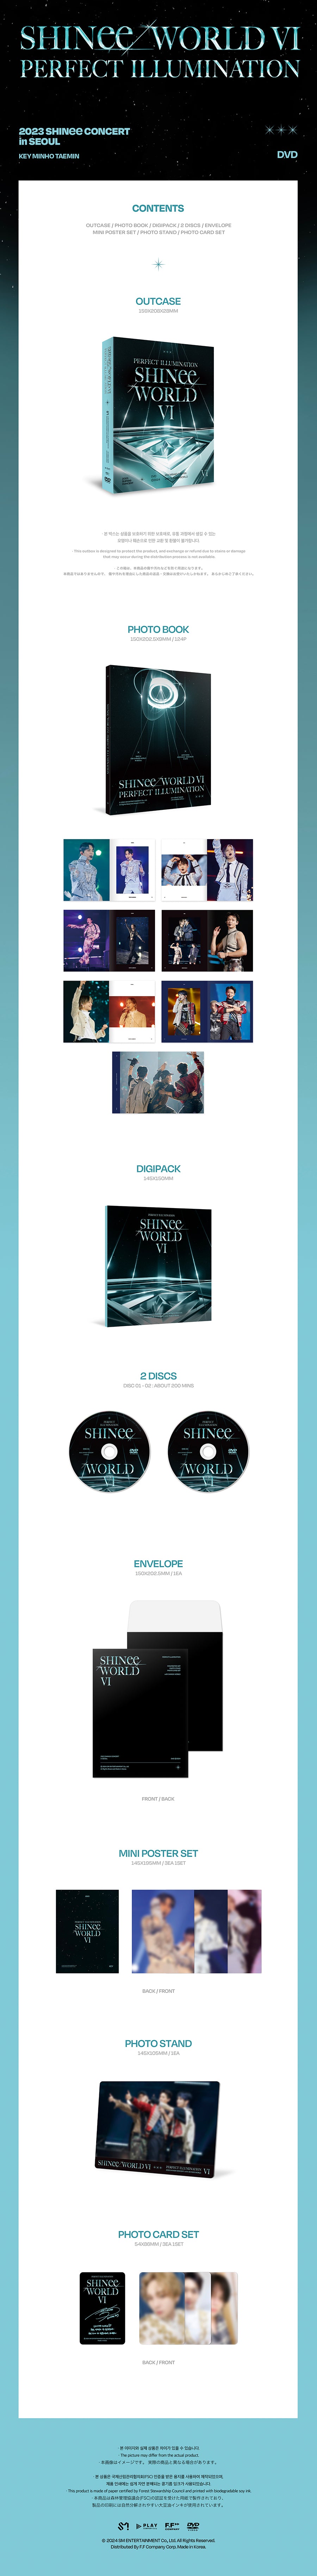 SHINEE WORLD IV IN SEOUL 'PERFECT ILLUMINATION' DVD DETAIL